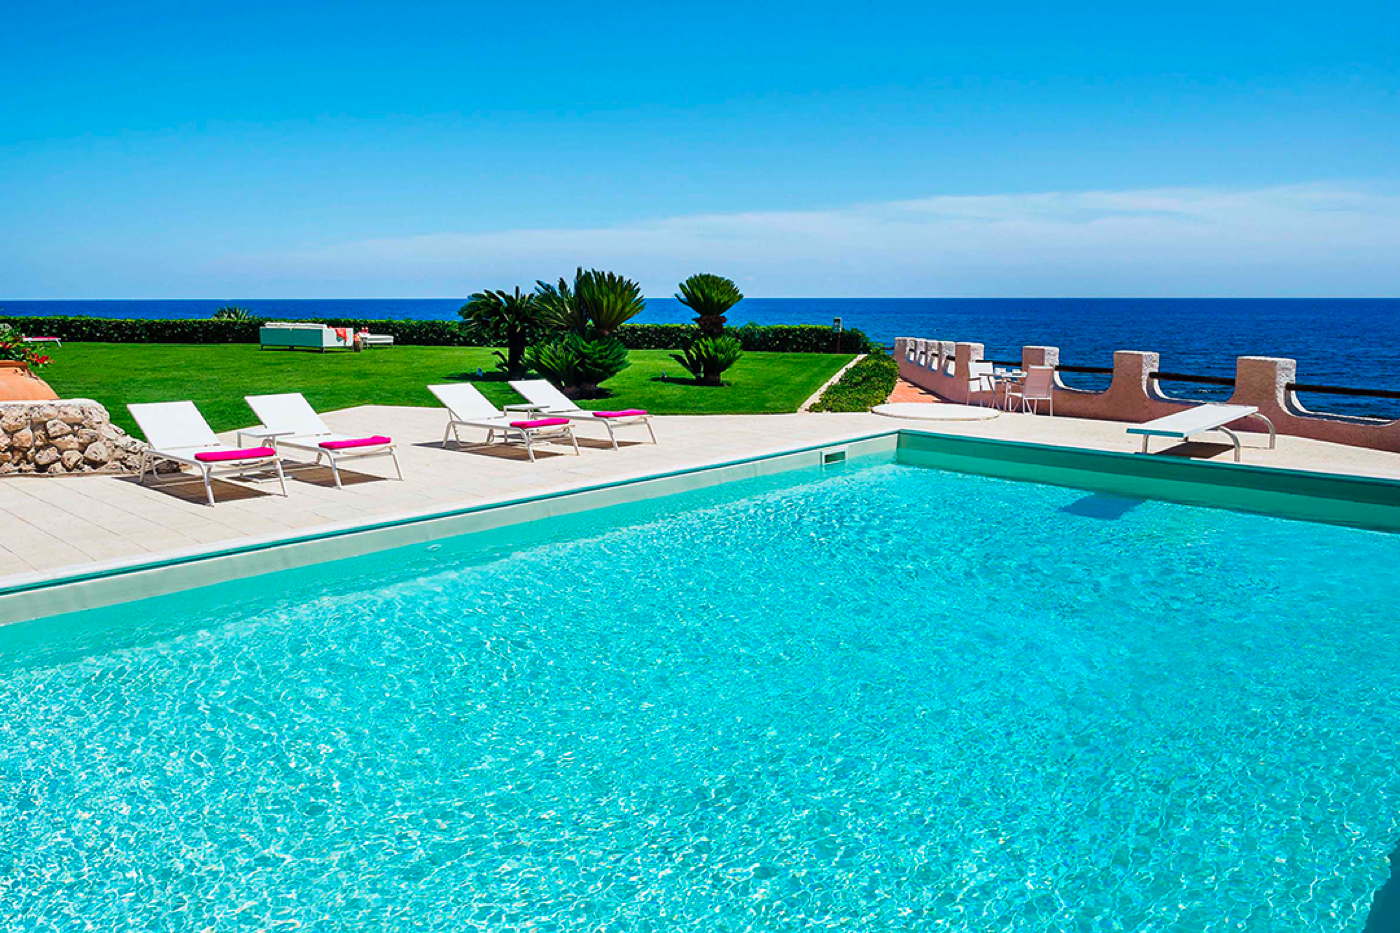 holiday villa-vacation home-villa rental-Italy-Sicily-Fontane Bianche